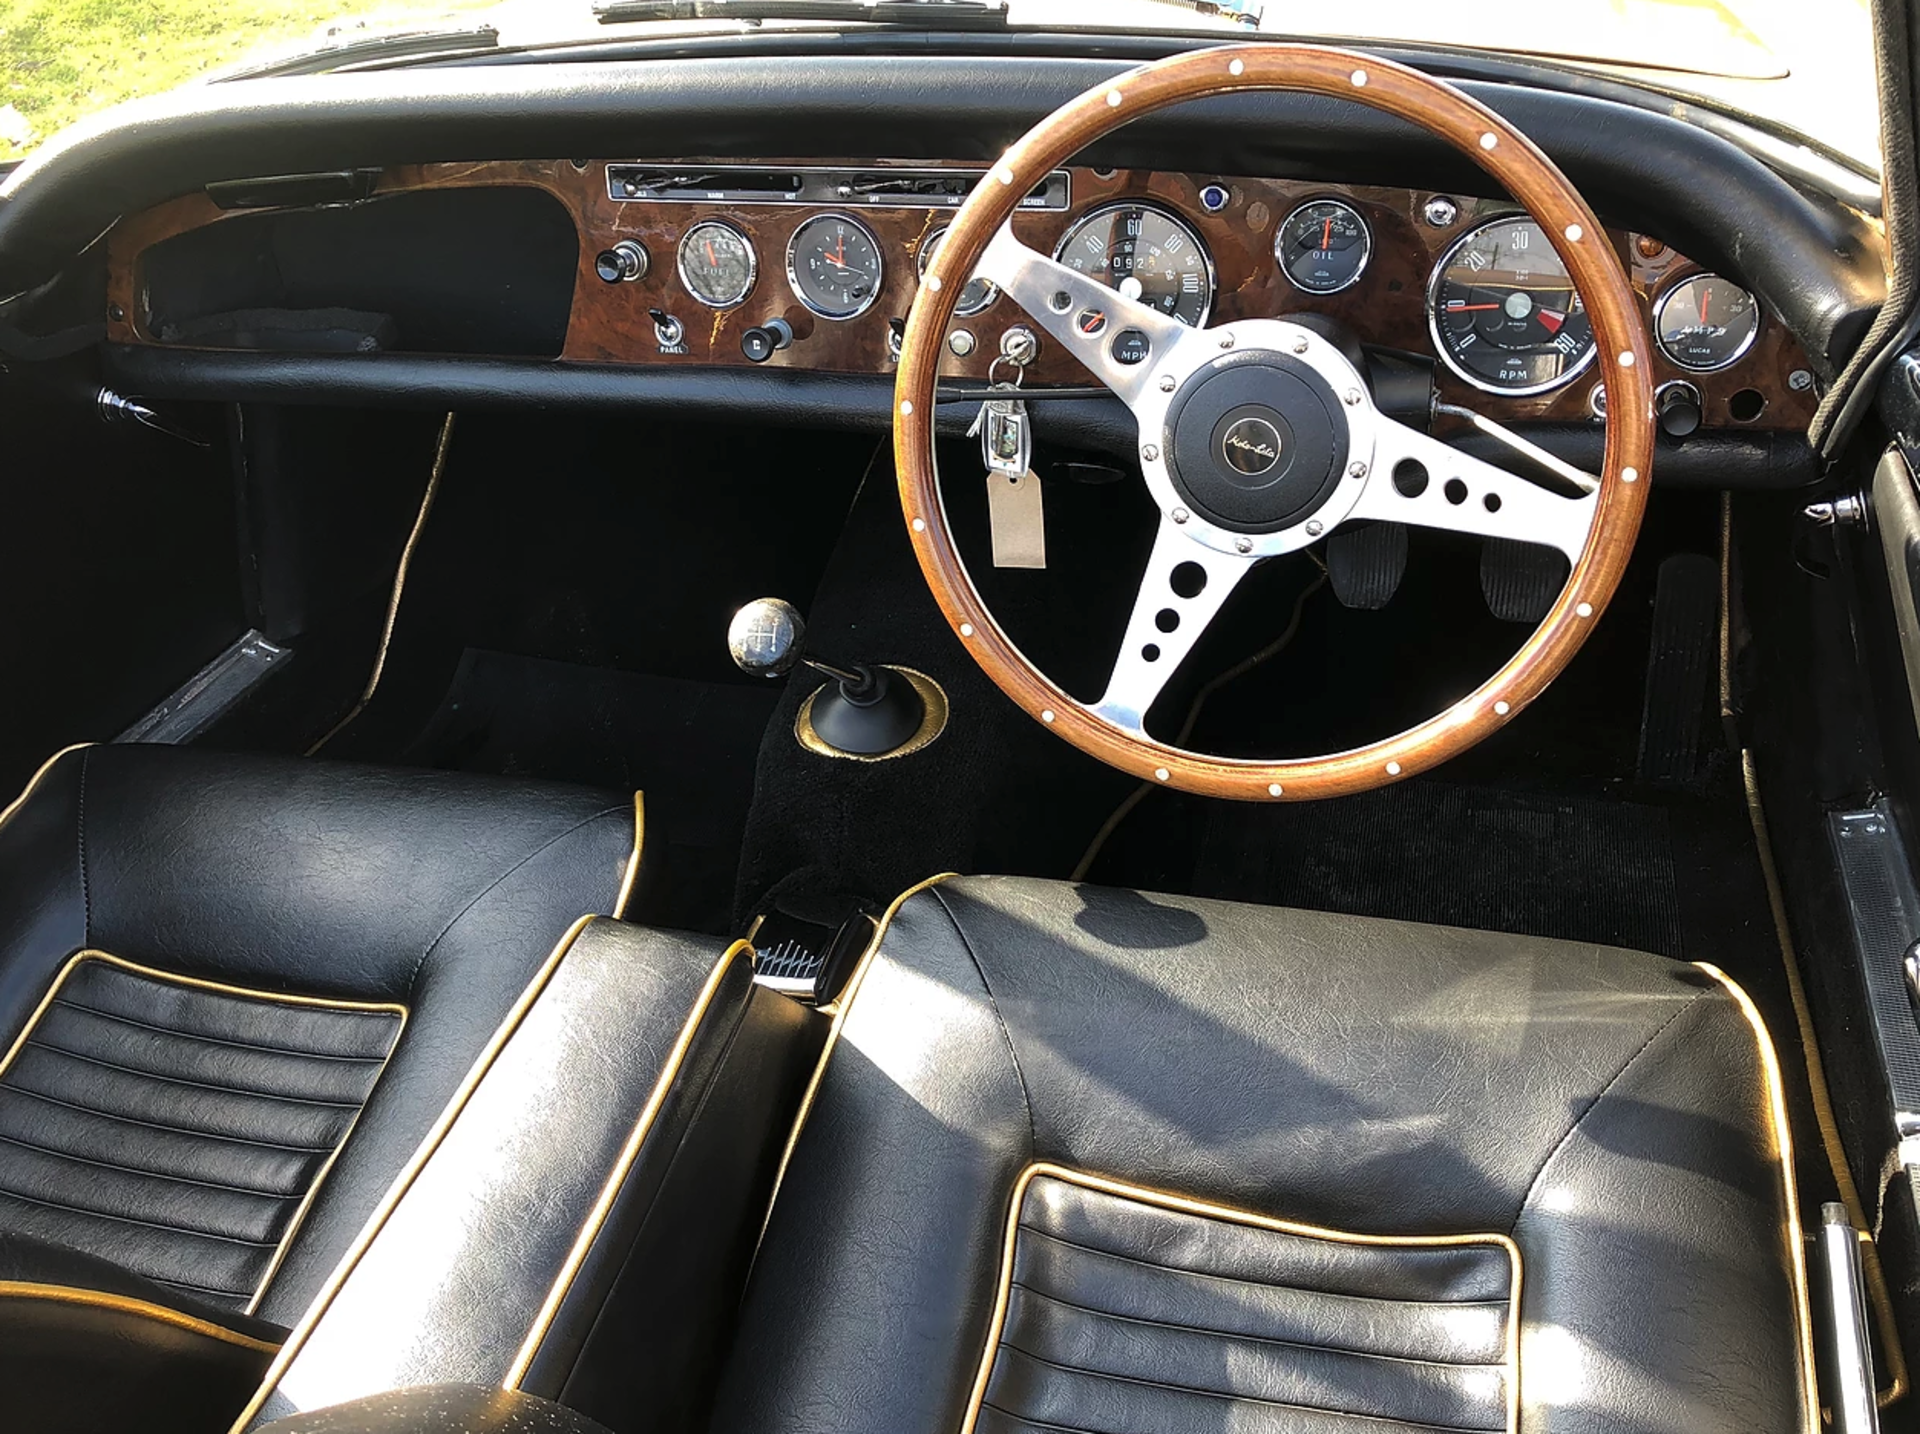 1963 Sunbeam Alpine, Series 3 GT - A Rare & Desirable Model - Image 6 of 12